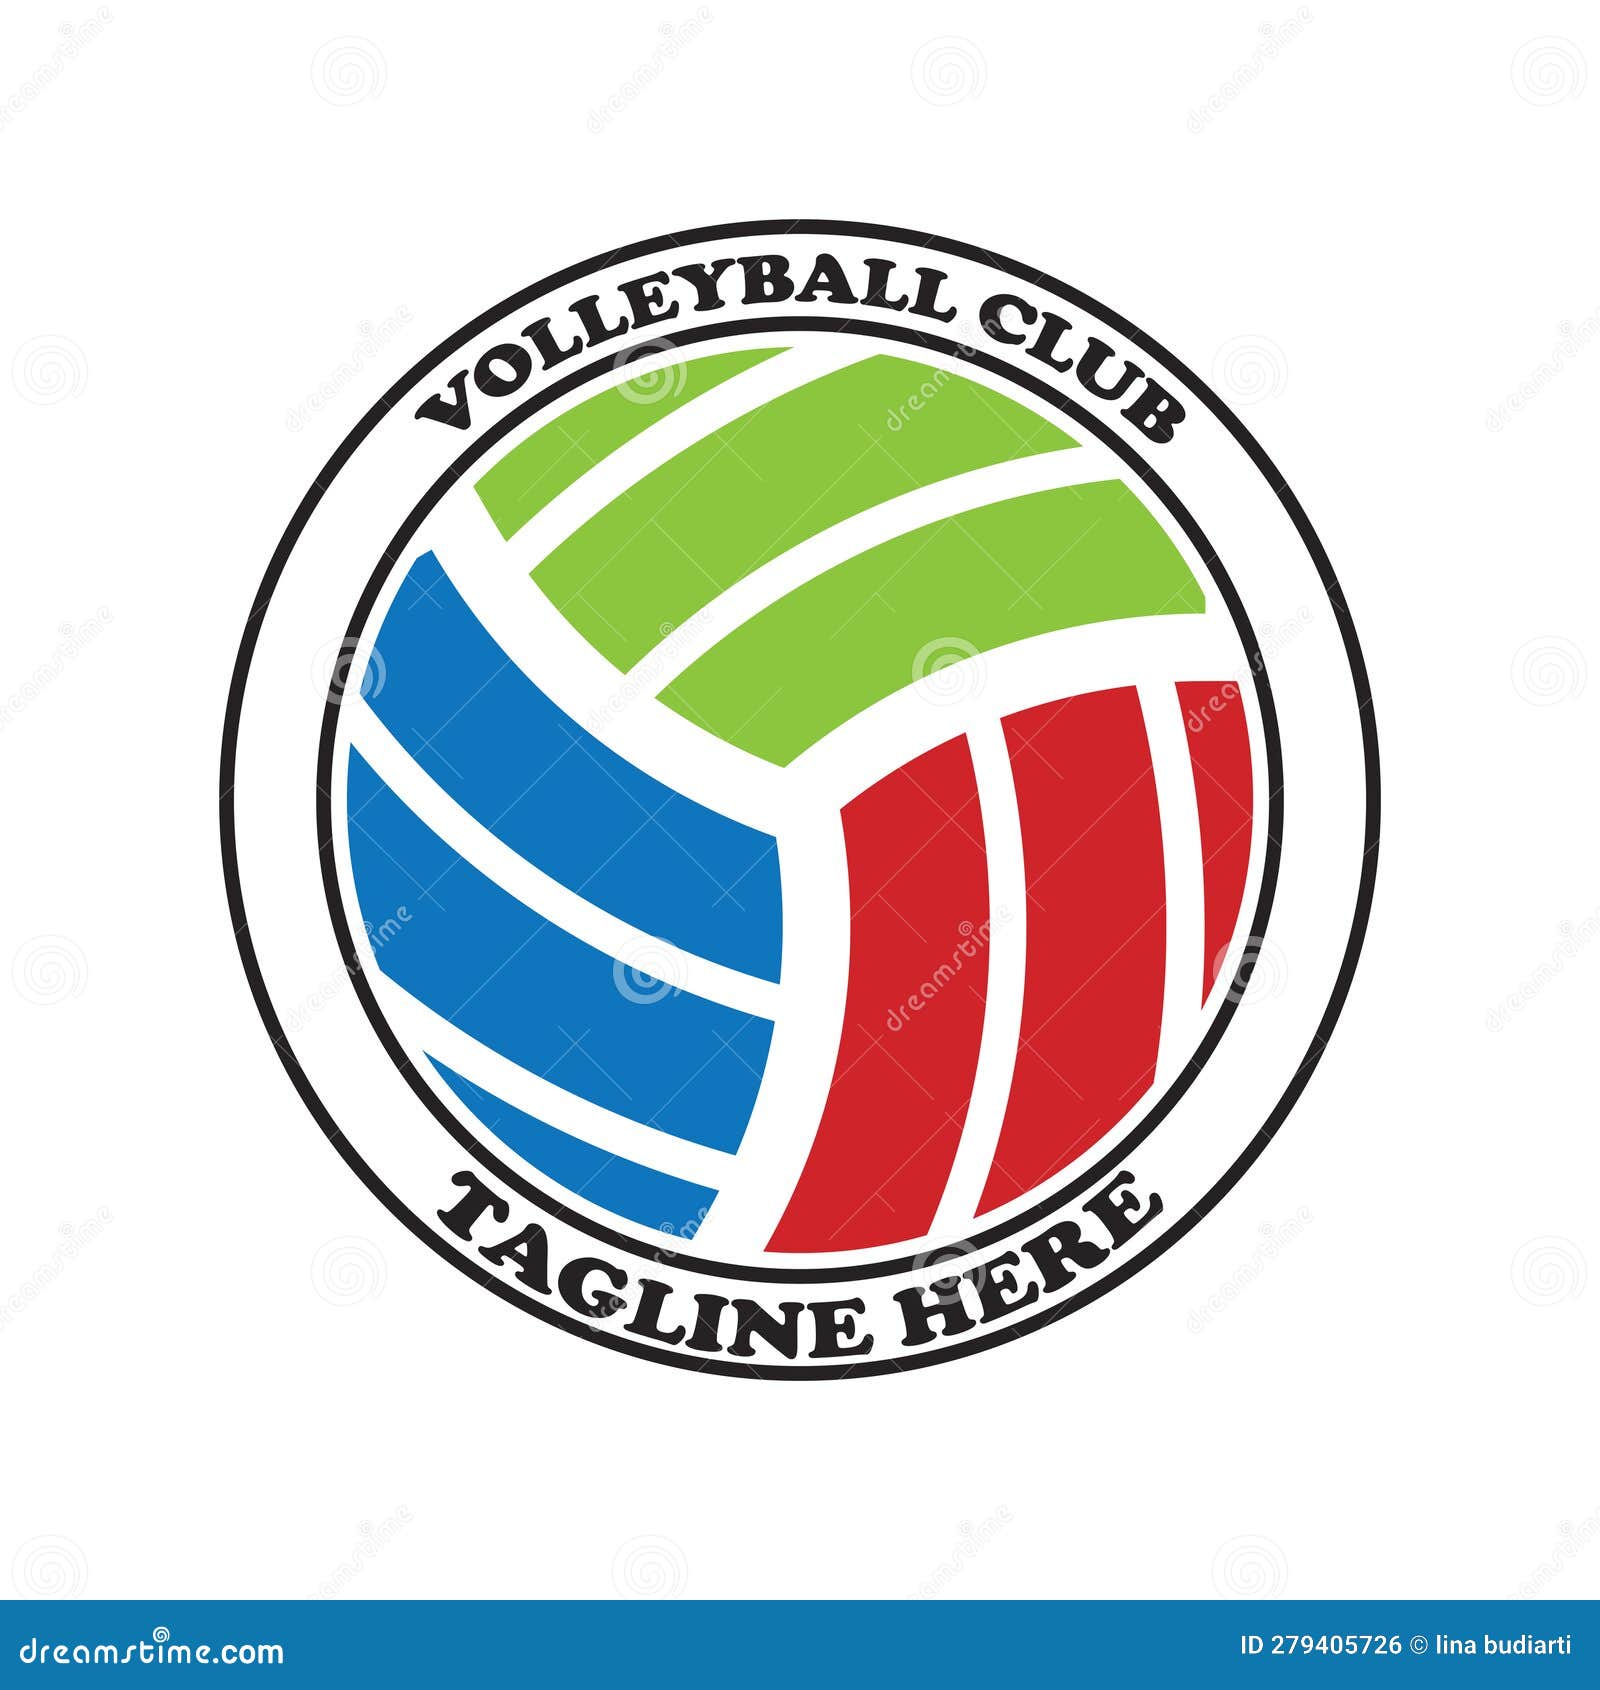 Volleyball team logo stock vector. Illustration of sportive - 279405726